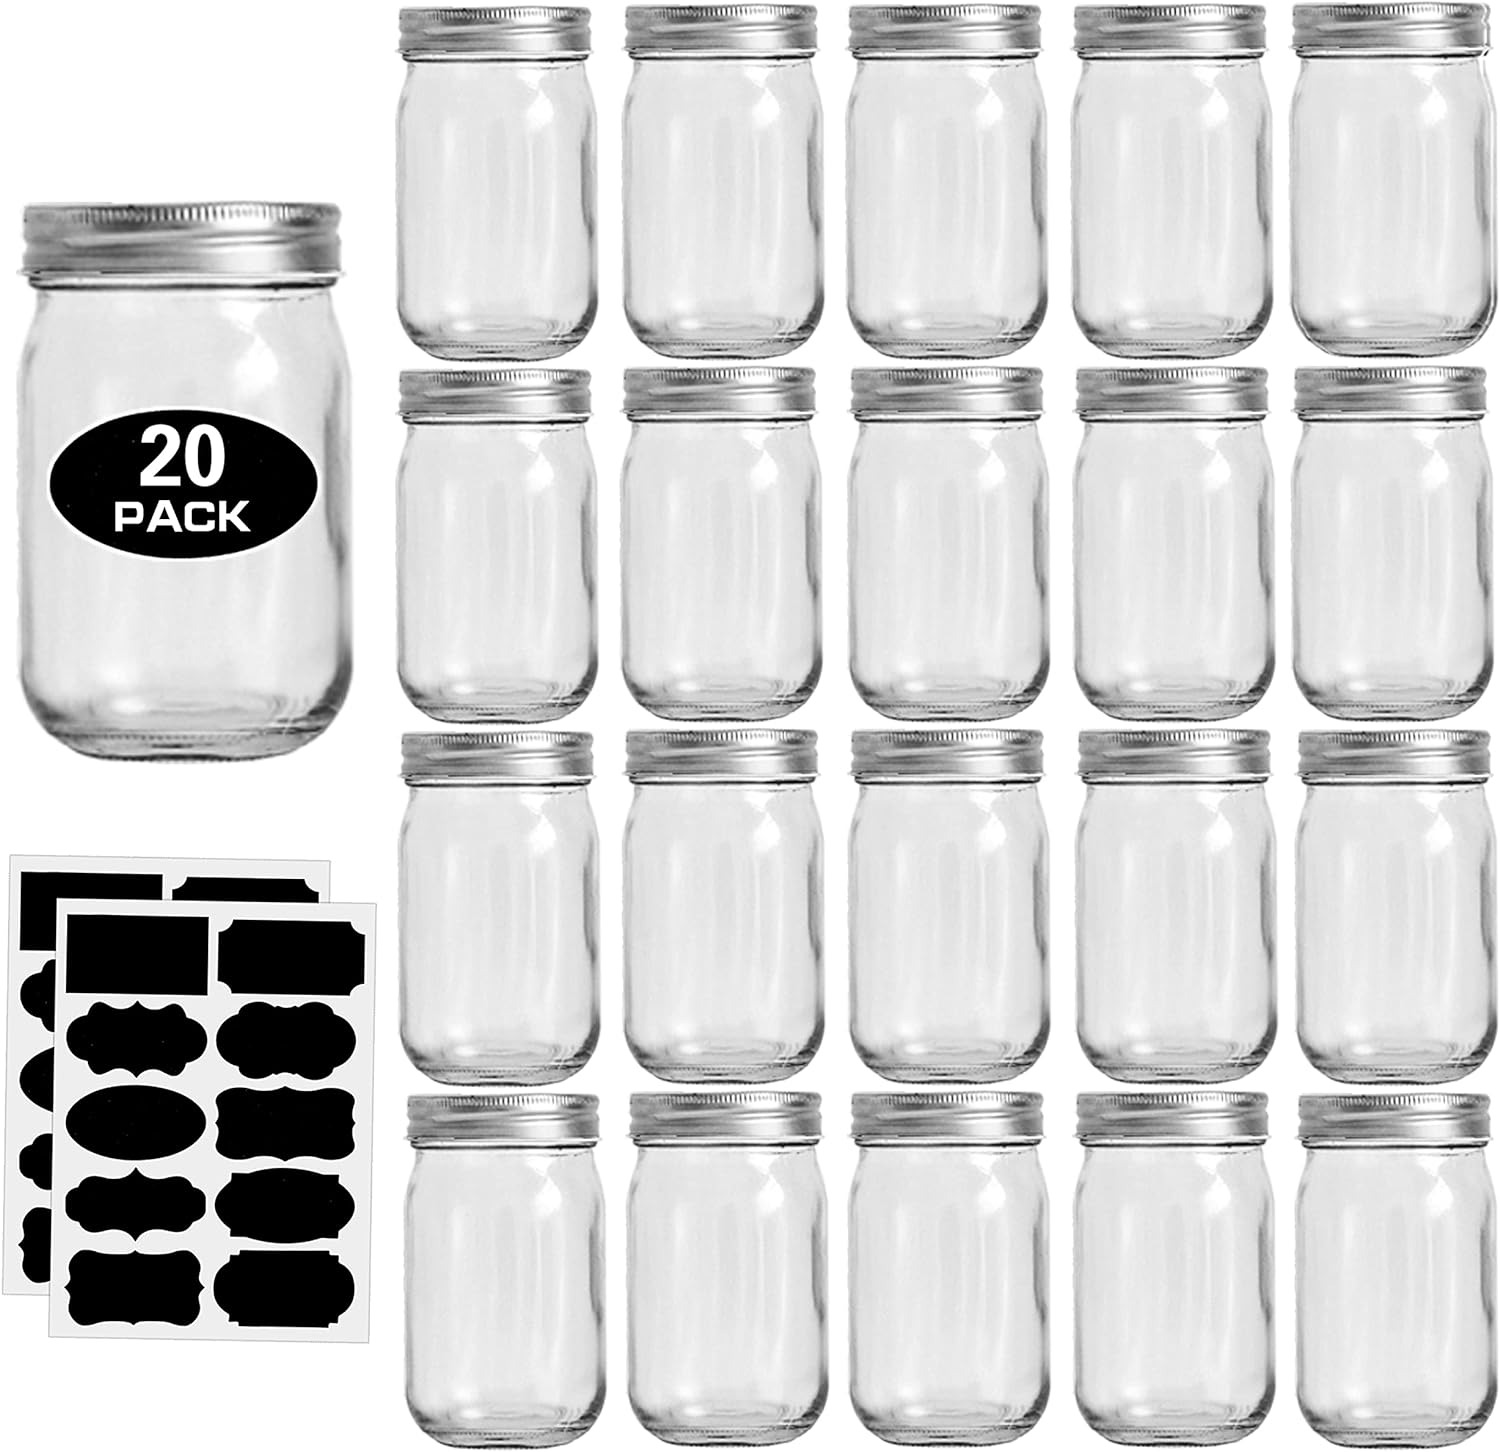 12Oz Glass Jars with Lids Regular Mouth 20 Pack -Mason Jars 12 Oz for Crafts, Me